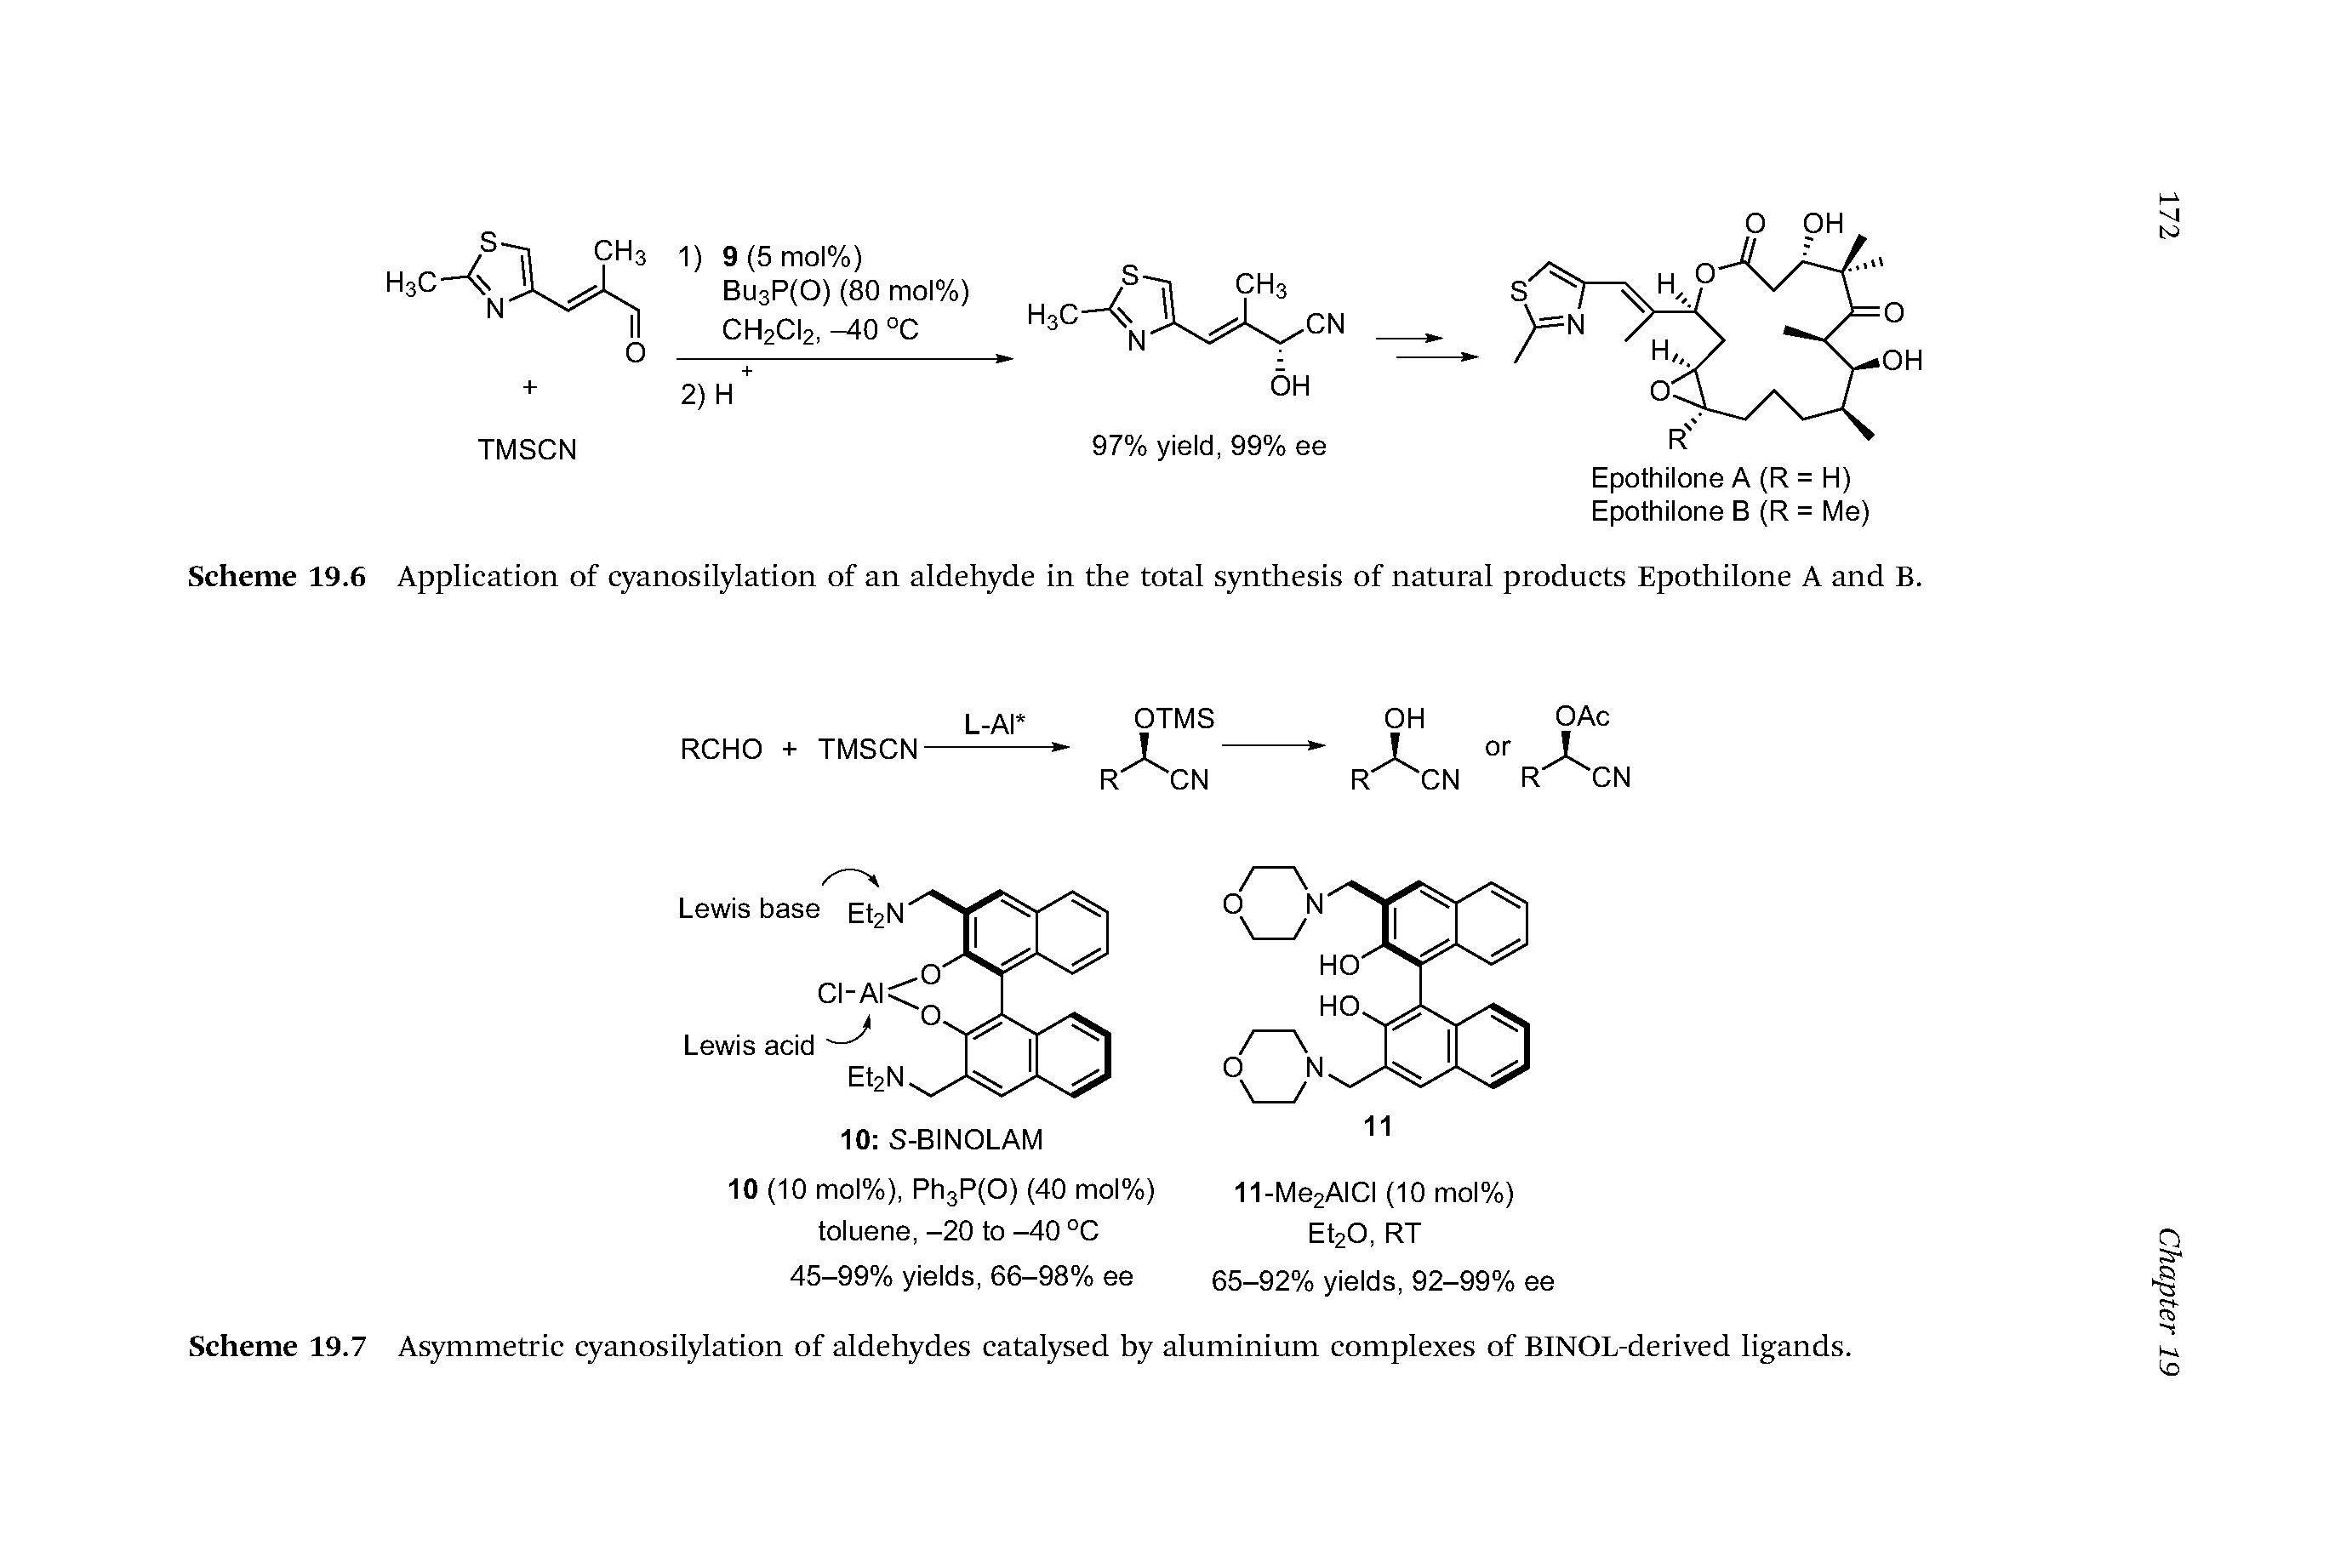 Scheme 19.7 Asymmetric cyanosilylation of aldehydes catalysed by aluminium complexes of BINOL-derived ligands.